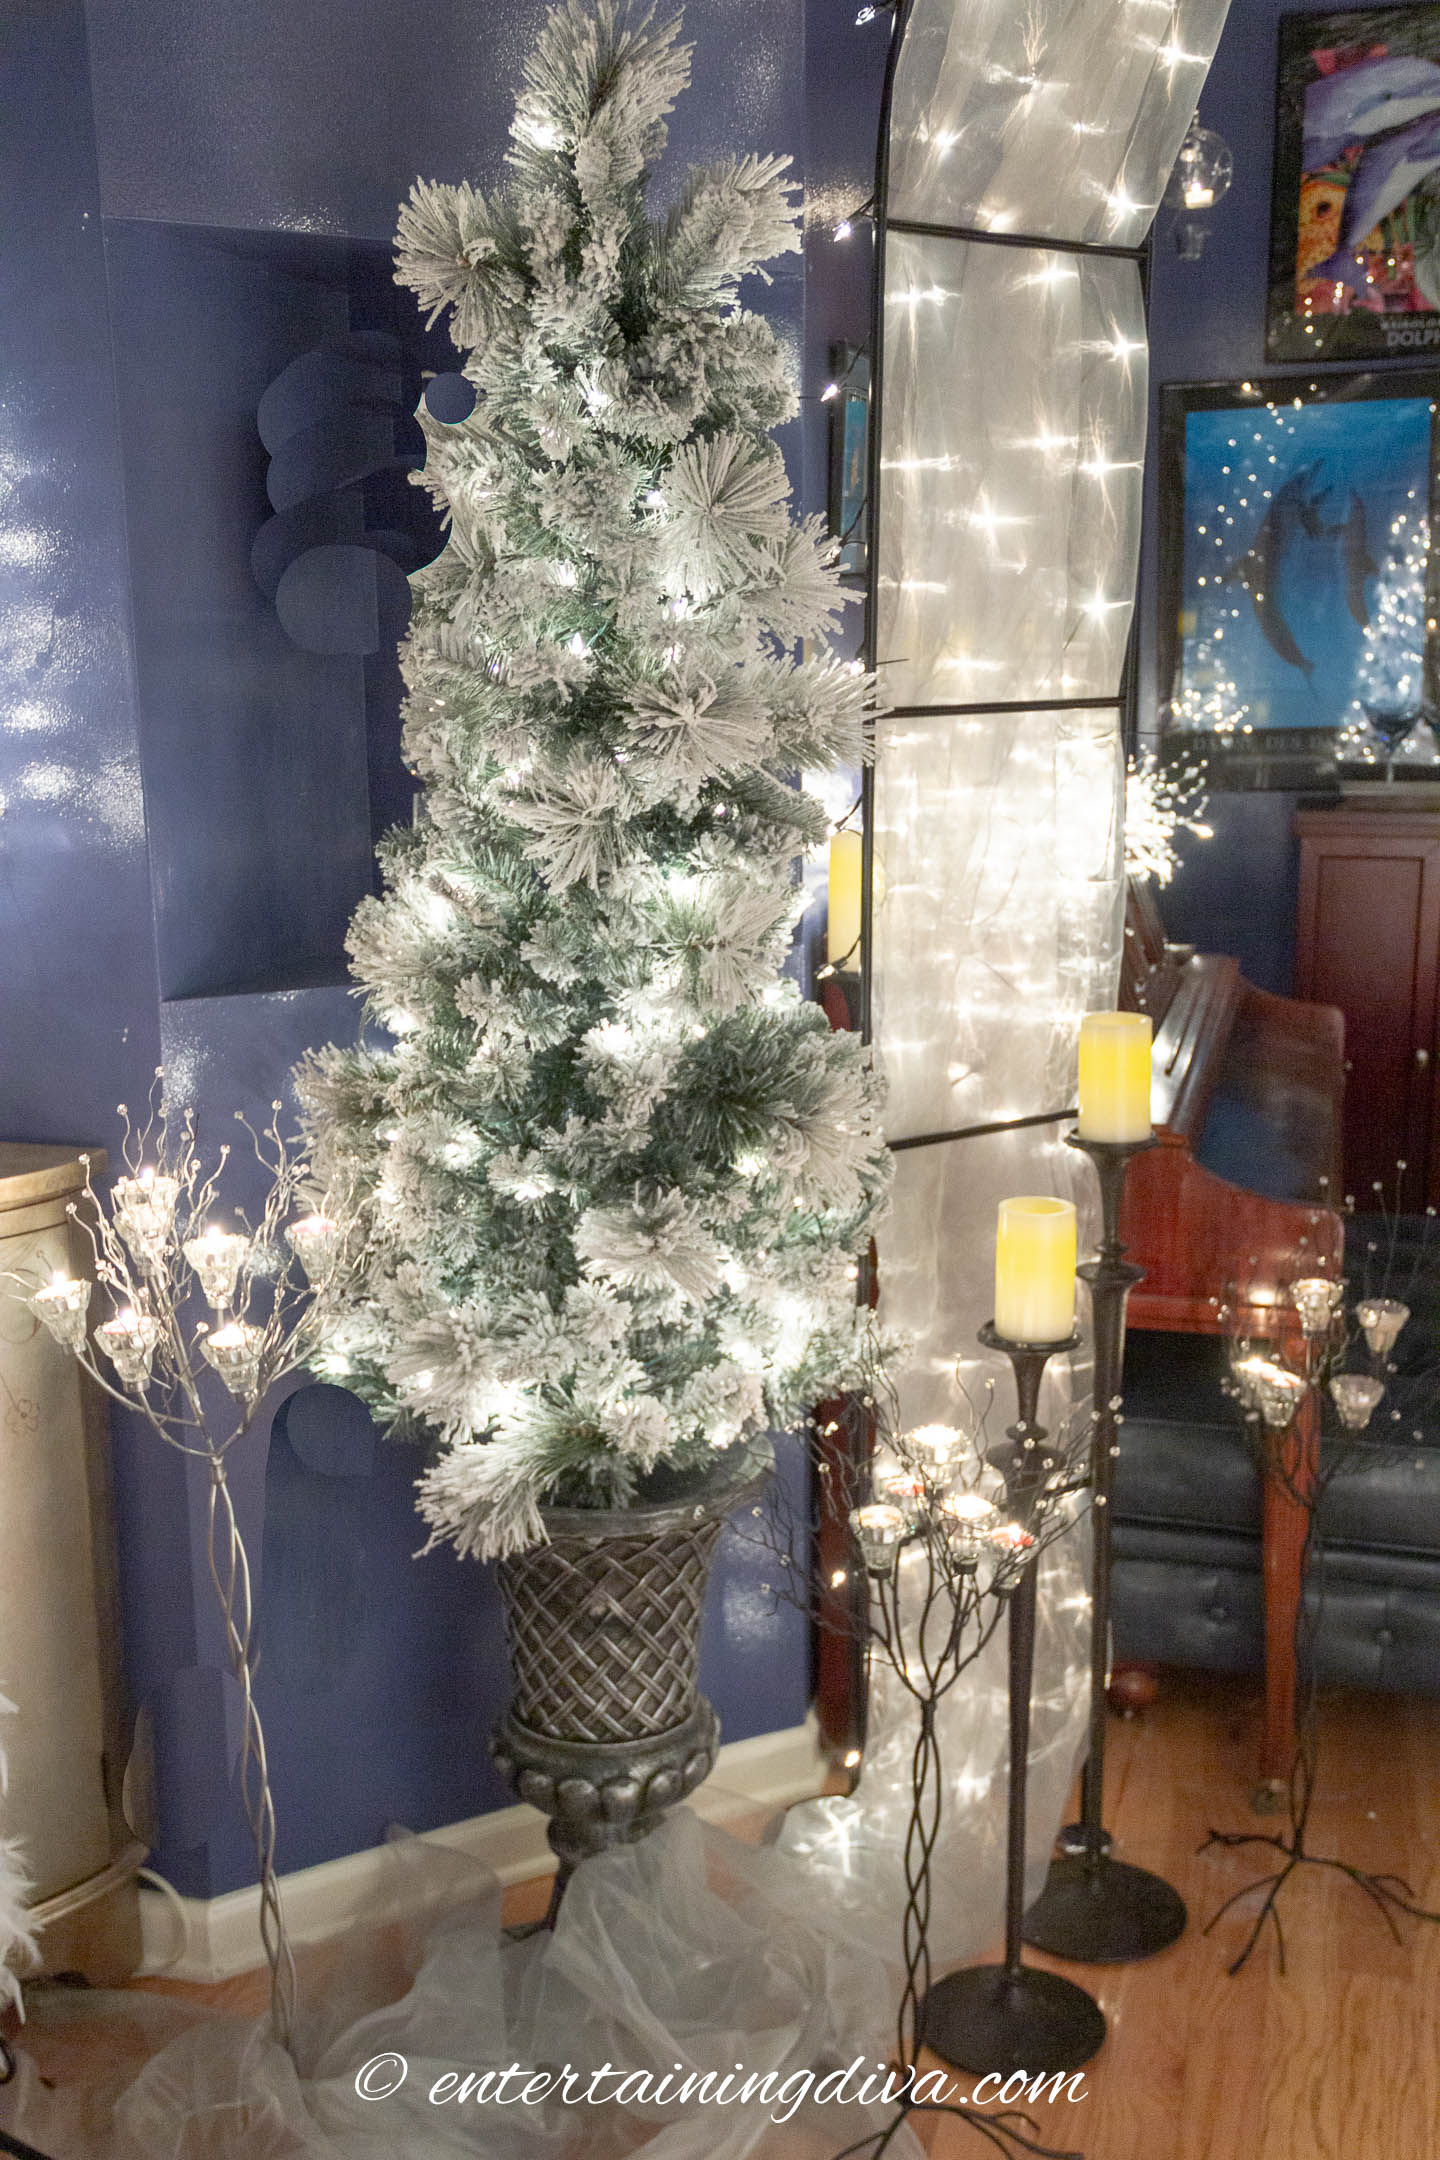 White flocked Christmas tree used for winter wonderland party decor